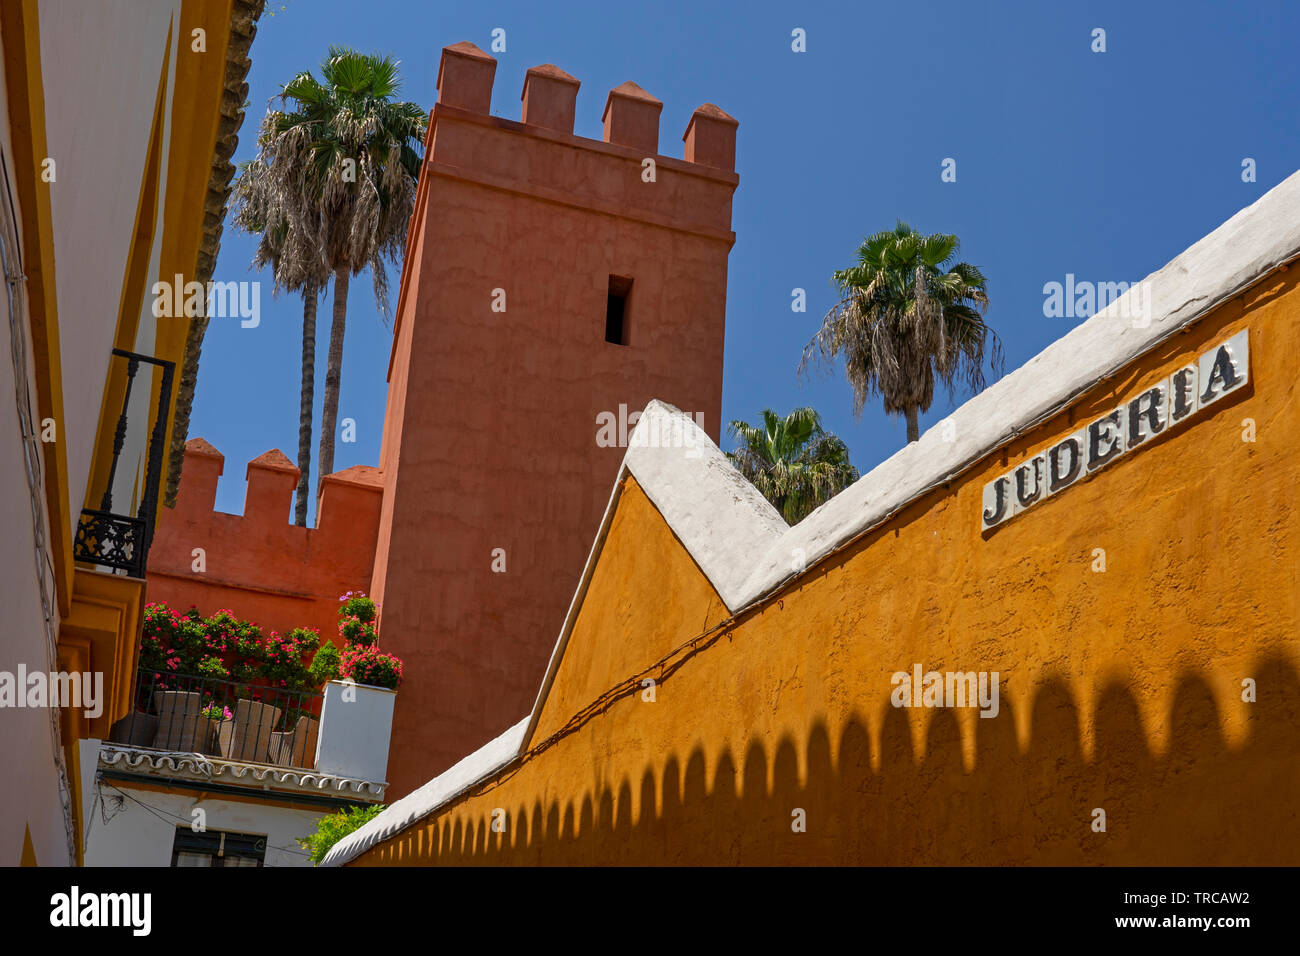 old street scene in Seville , Andalucia,Spain,Europe Stock Photo